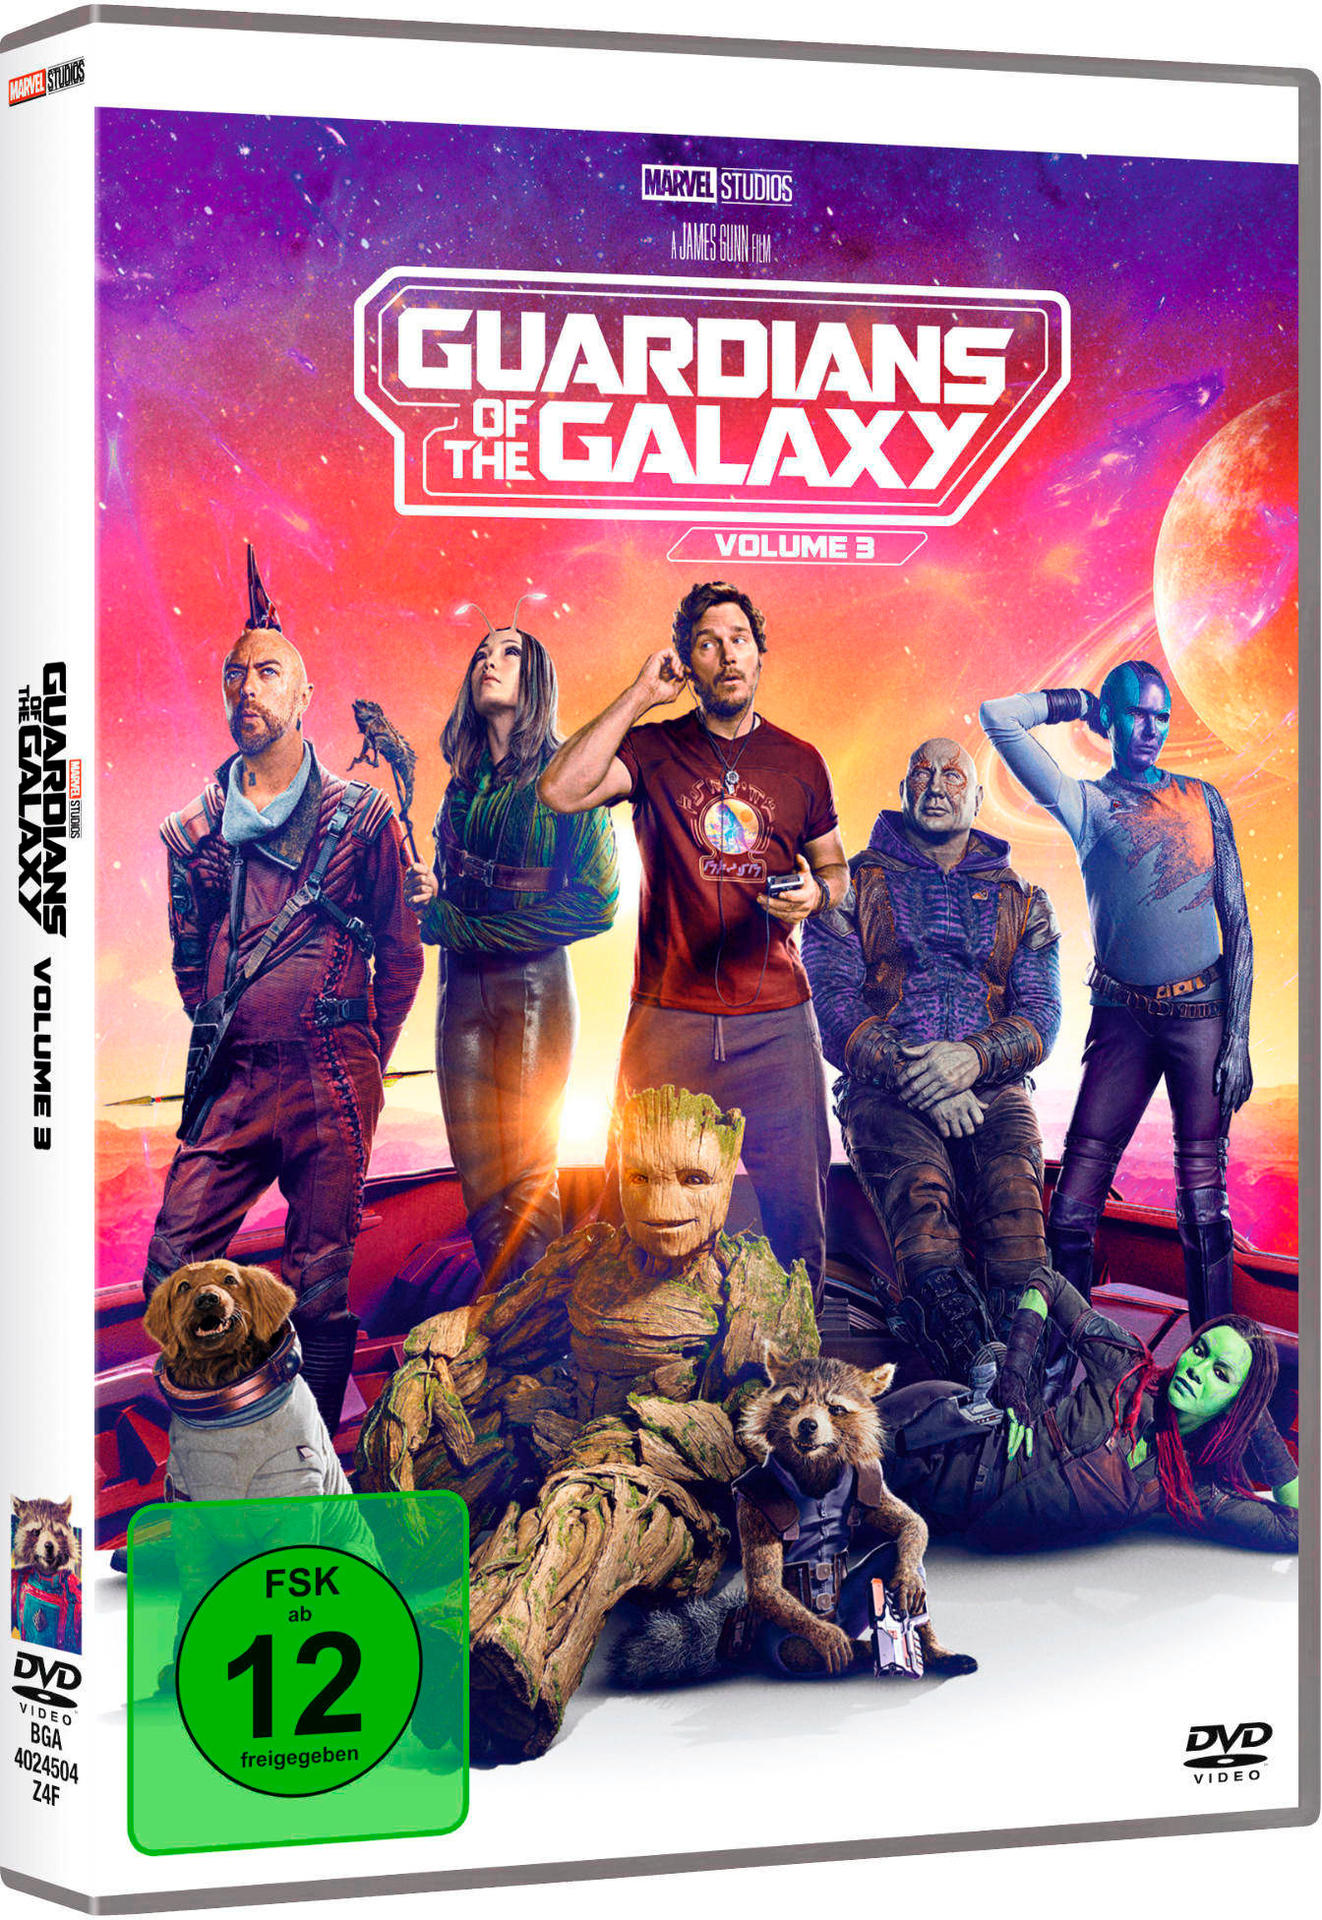 Vol. Galaxy Guardians 3 the DVD of